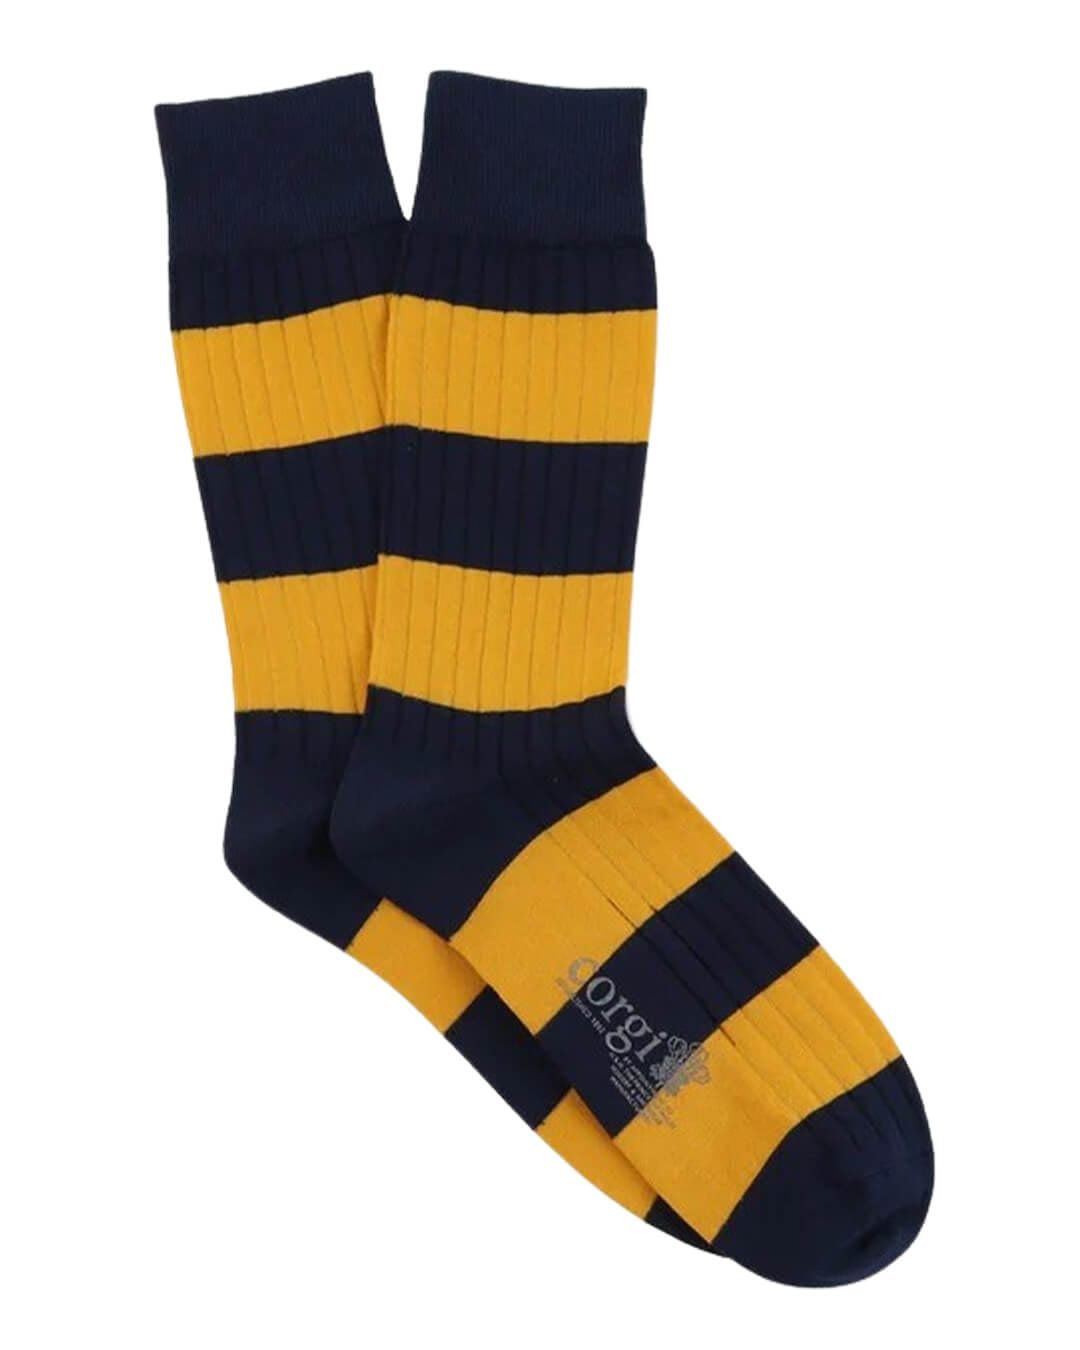 Corgi Socks Corgi Rugby Striped Navy Socks